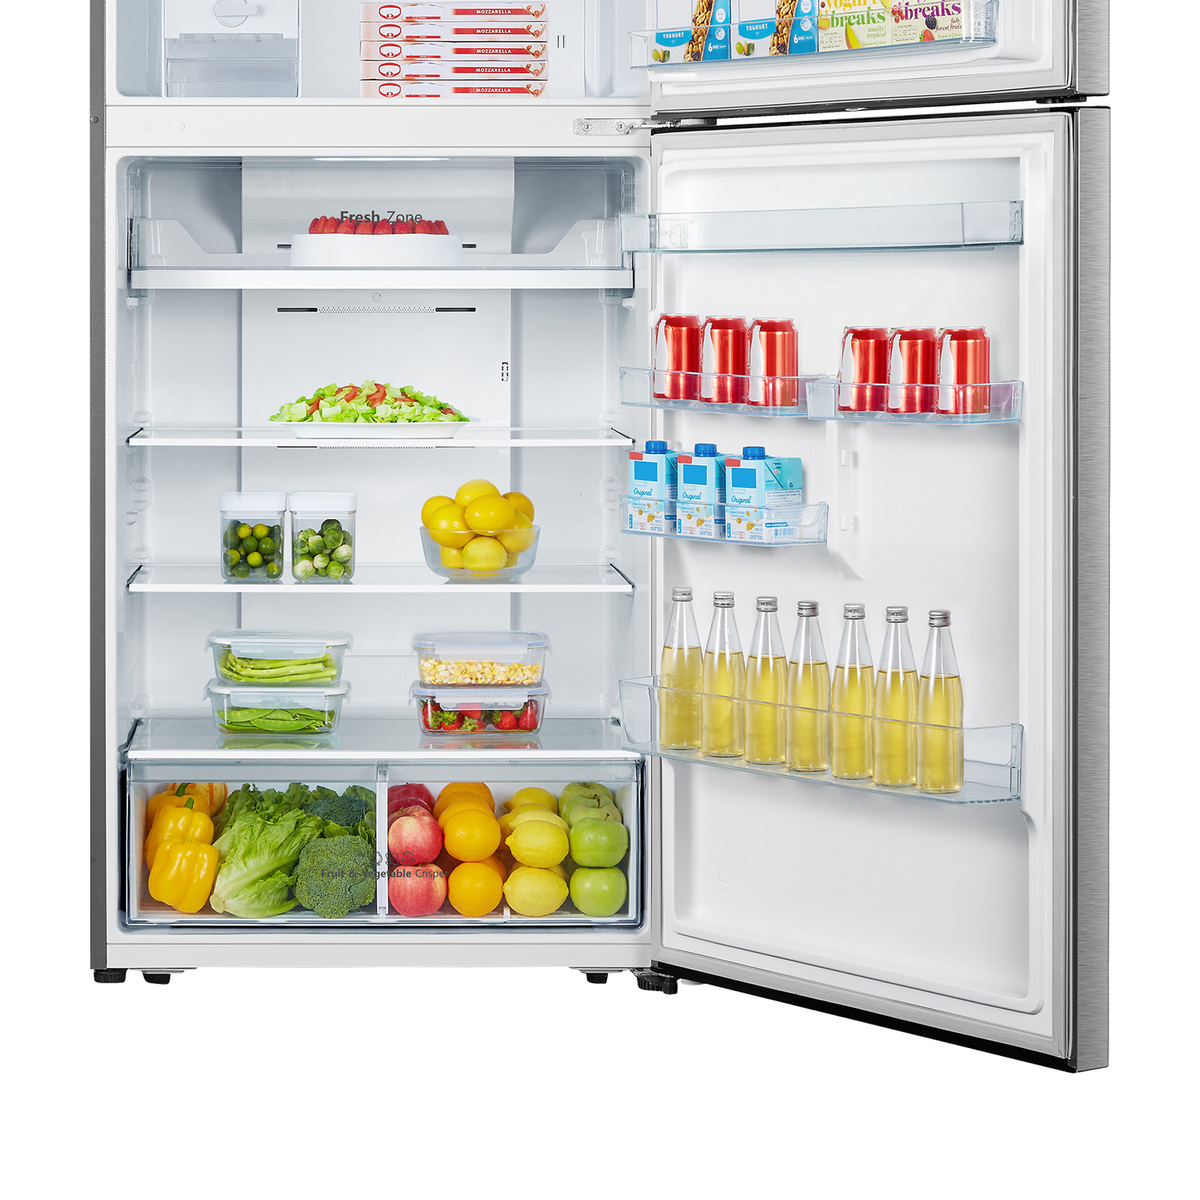 Hisense Double Door Refrigerator, 508 L, Stainless Steel, RT649N4ASU1